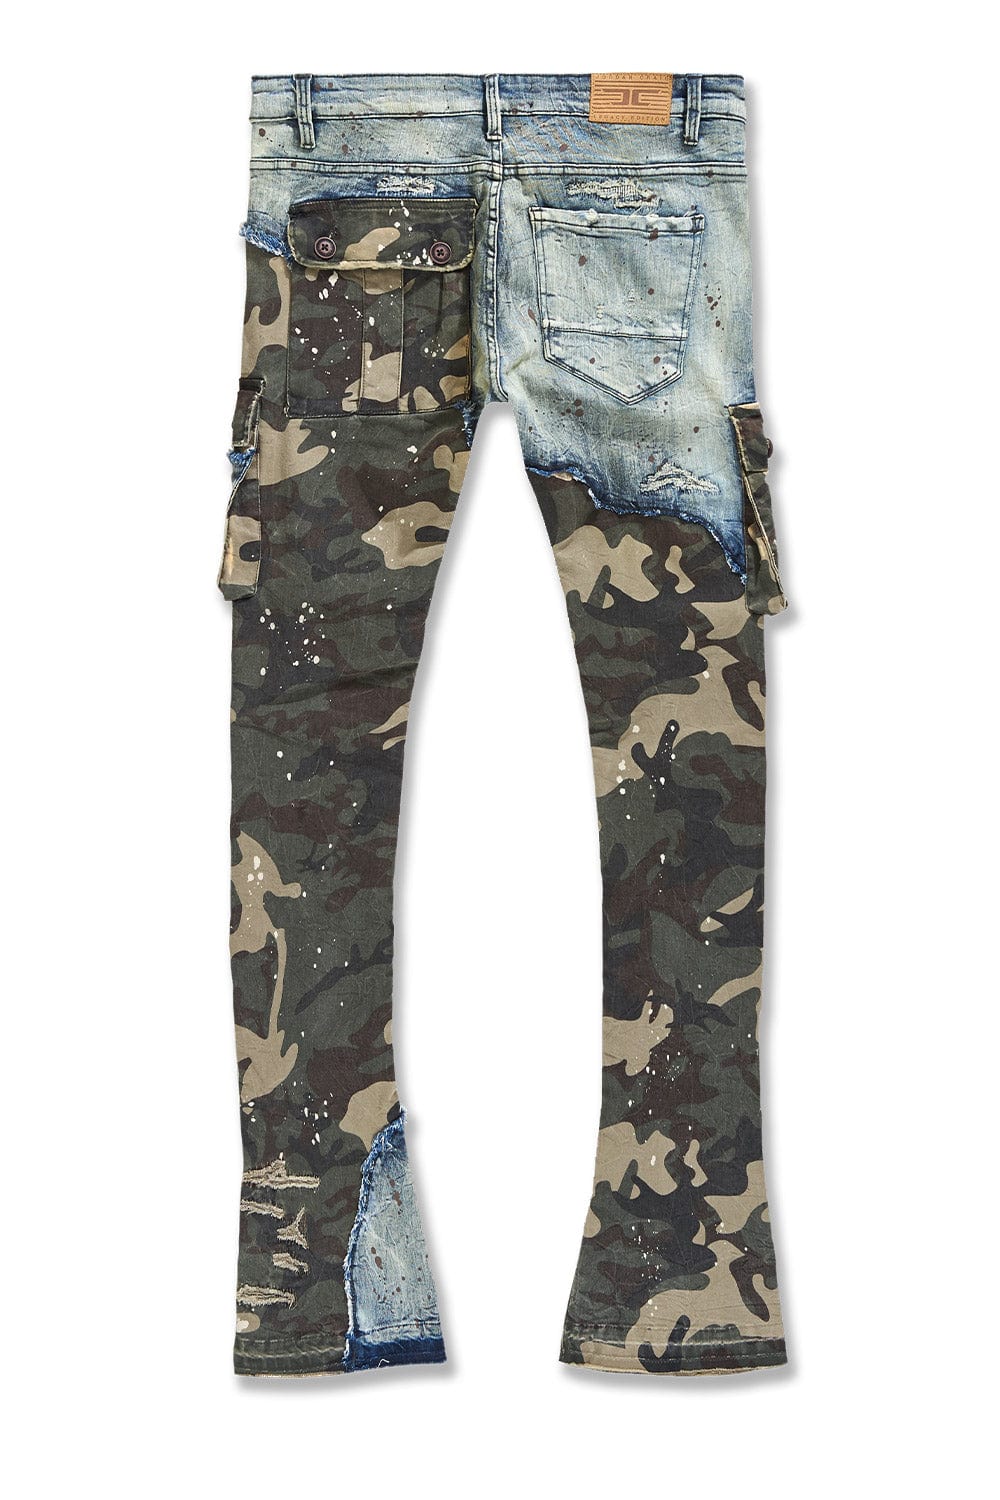 Vintage Liberty Woodland Camouflage Denim Camo Jeans Pants Size 42x32 | eBay